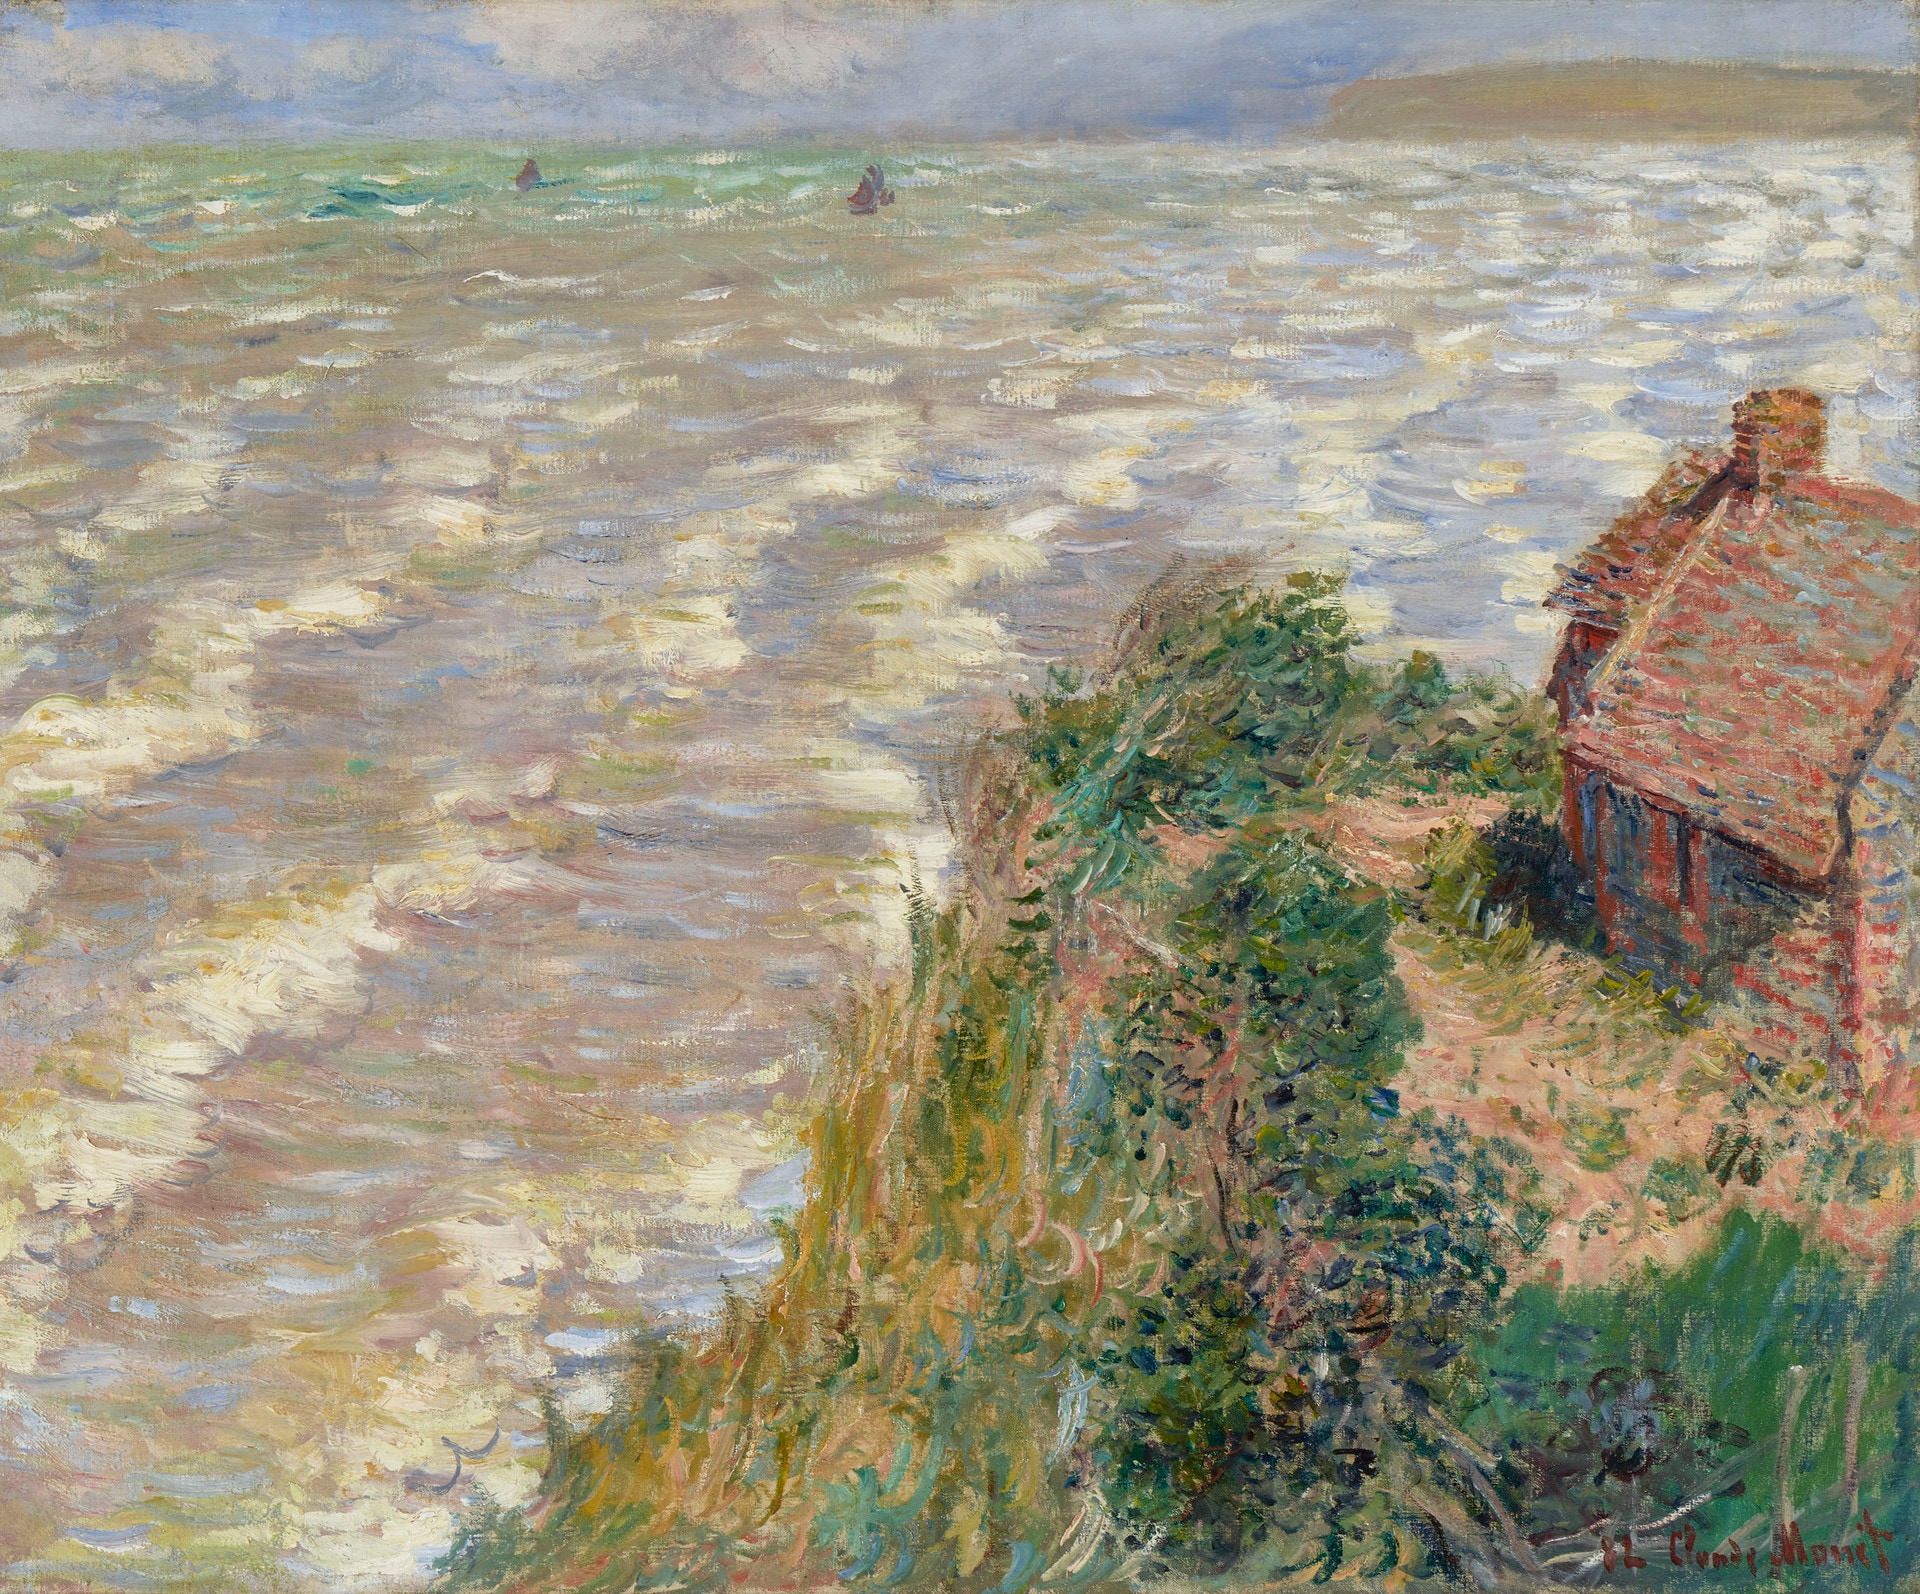 Claude Monet (1840-1926), Marea crescente a Pourville, 1882. Olio su tela, 66 x 81.3 cm. Brooklyn Museum, dono di Mrs. Horace O. Havemeyer. (Photo: Brooklyn Museum) 